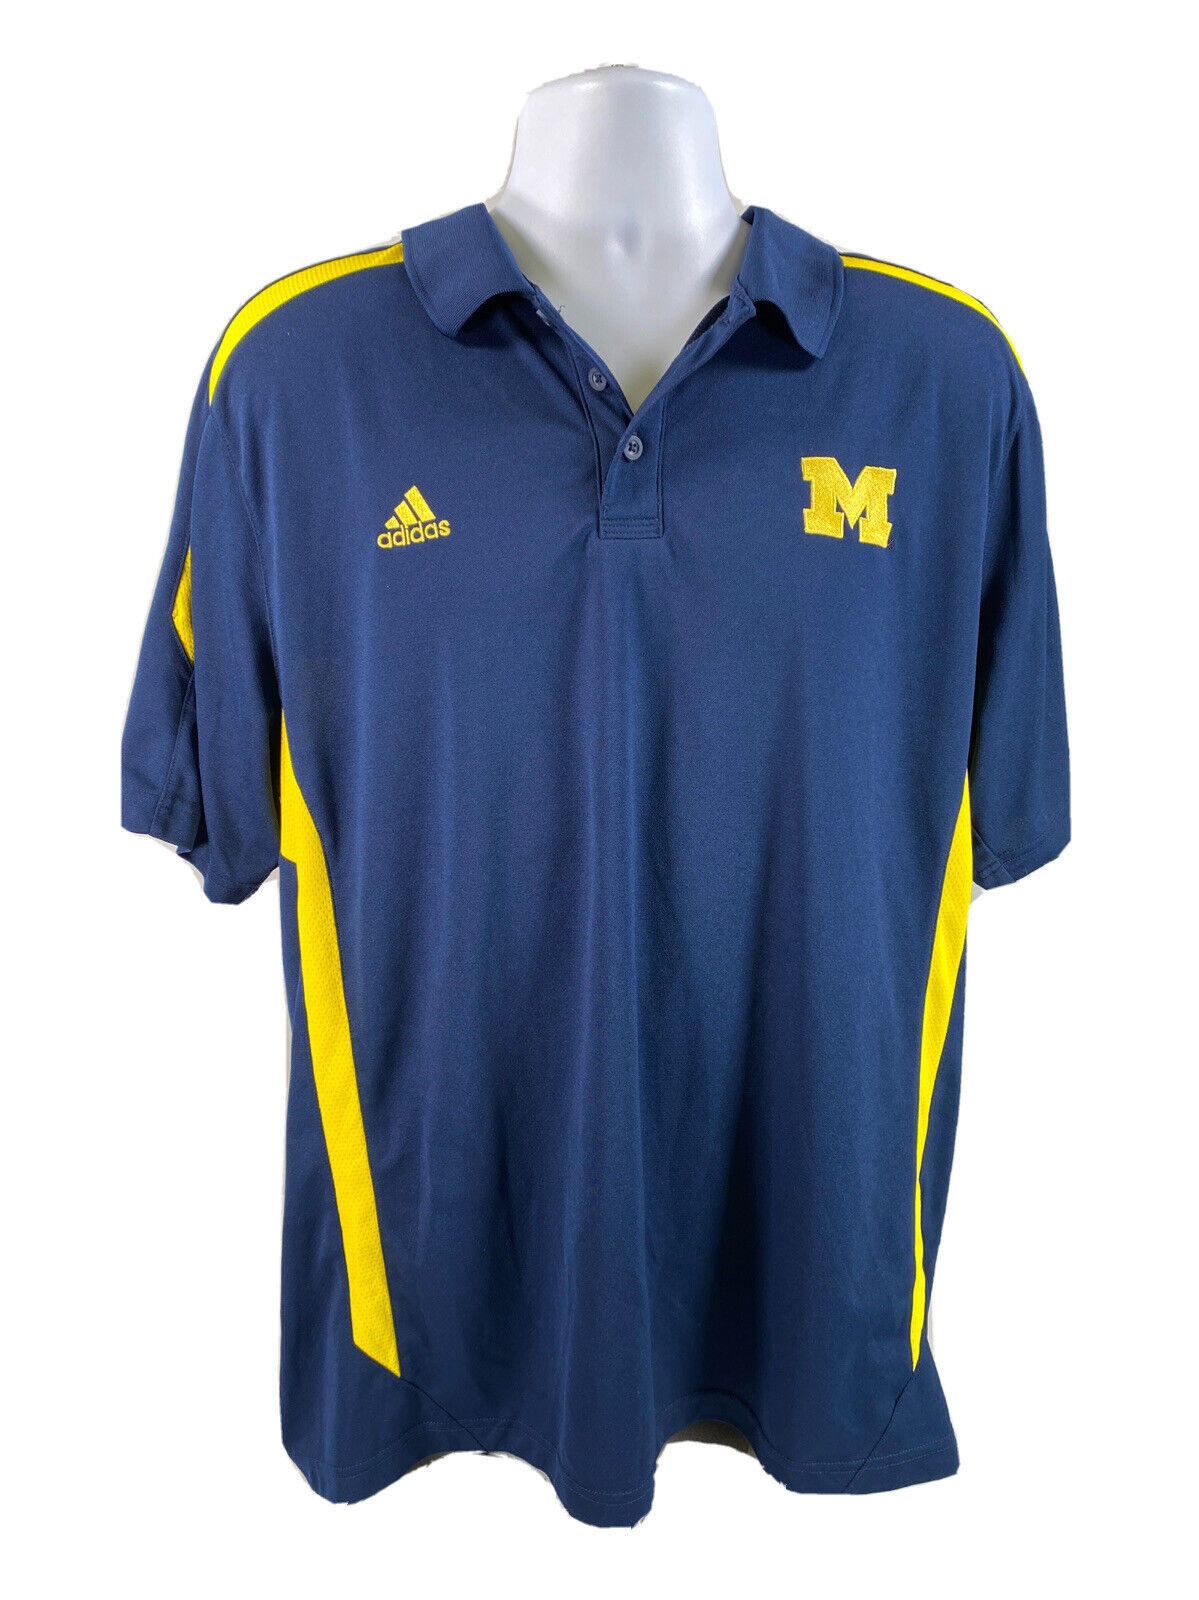 Adidas Men's Blue/Yellow Climalite Short Sleeve Polo Shirt - XL